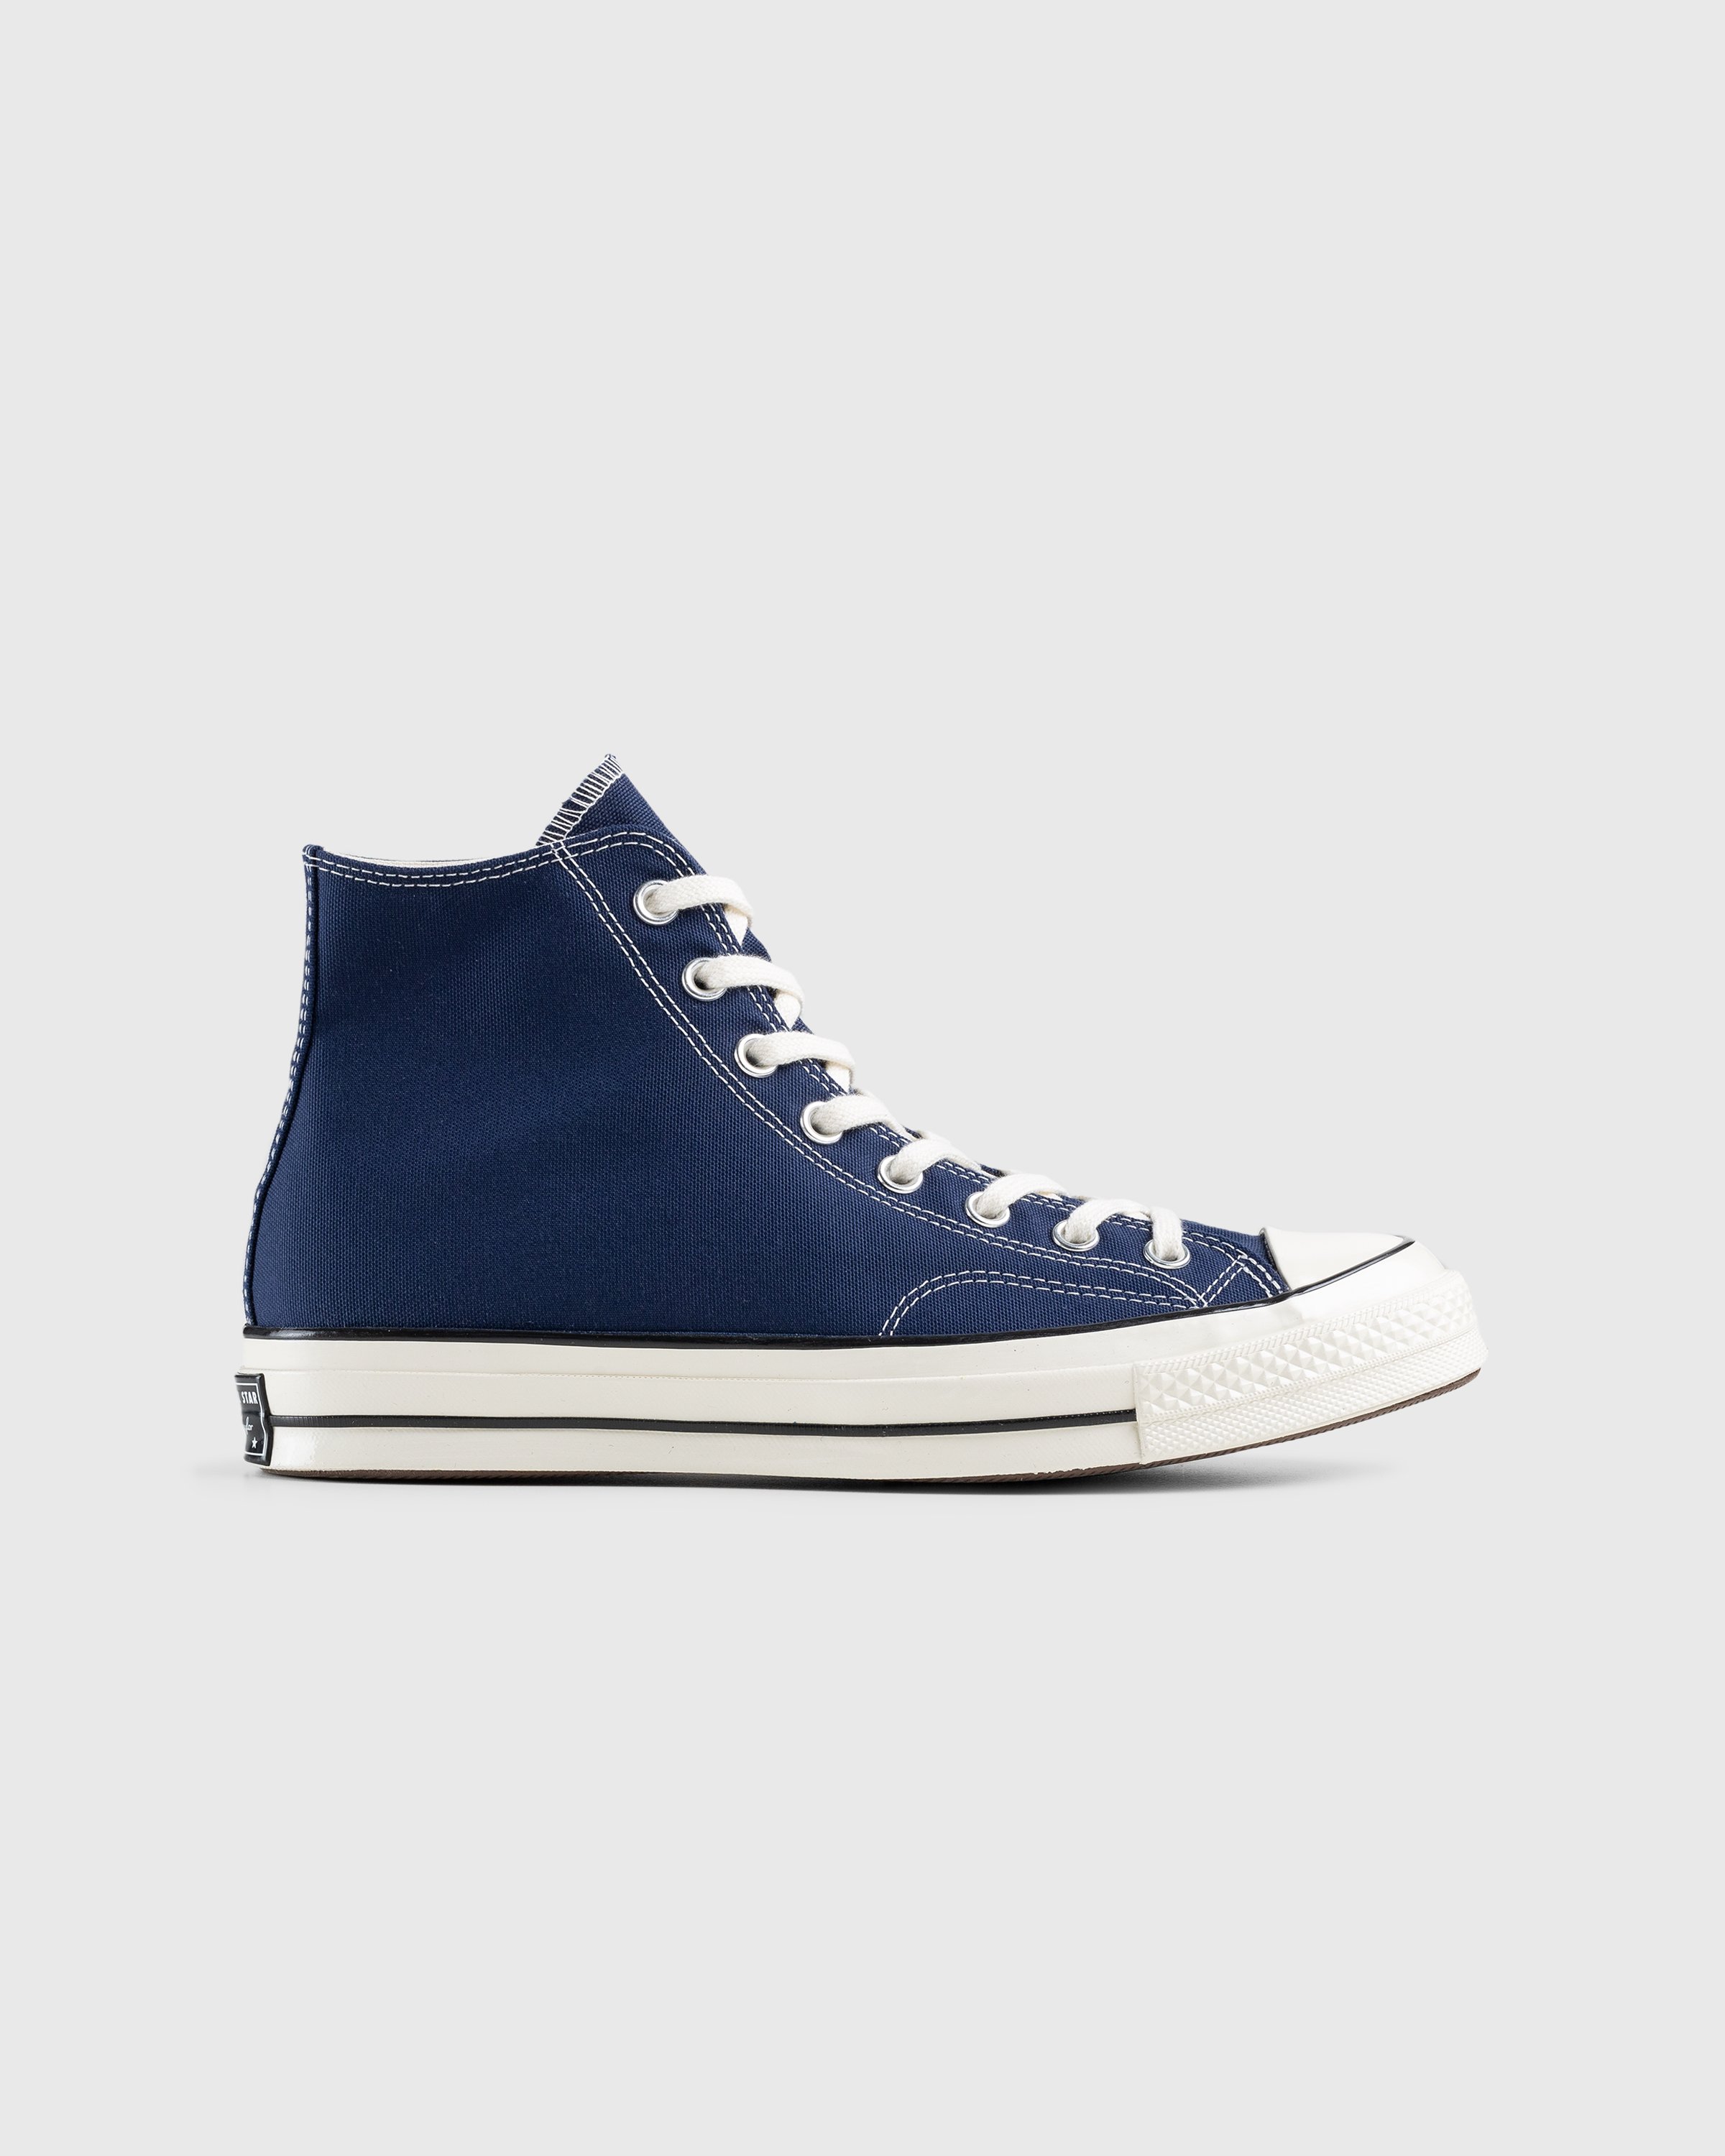 Converse - Chuck 70 Hi Midnight Navy/Egret/Black - Footwear - Blue - Image 1